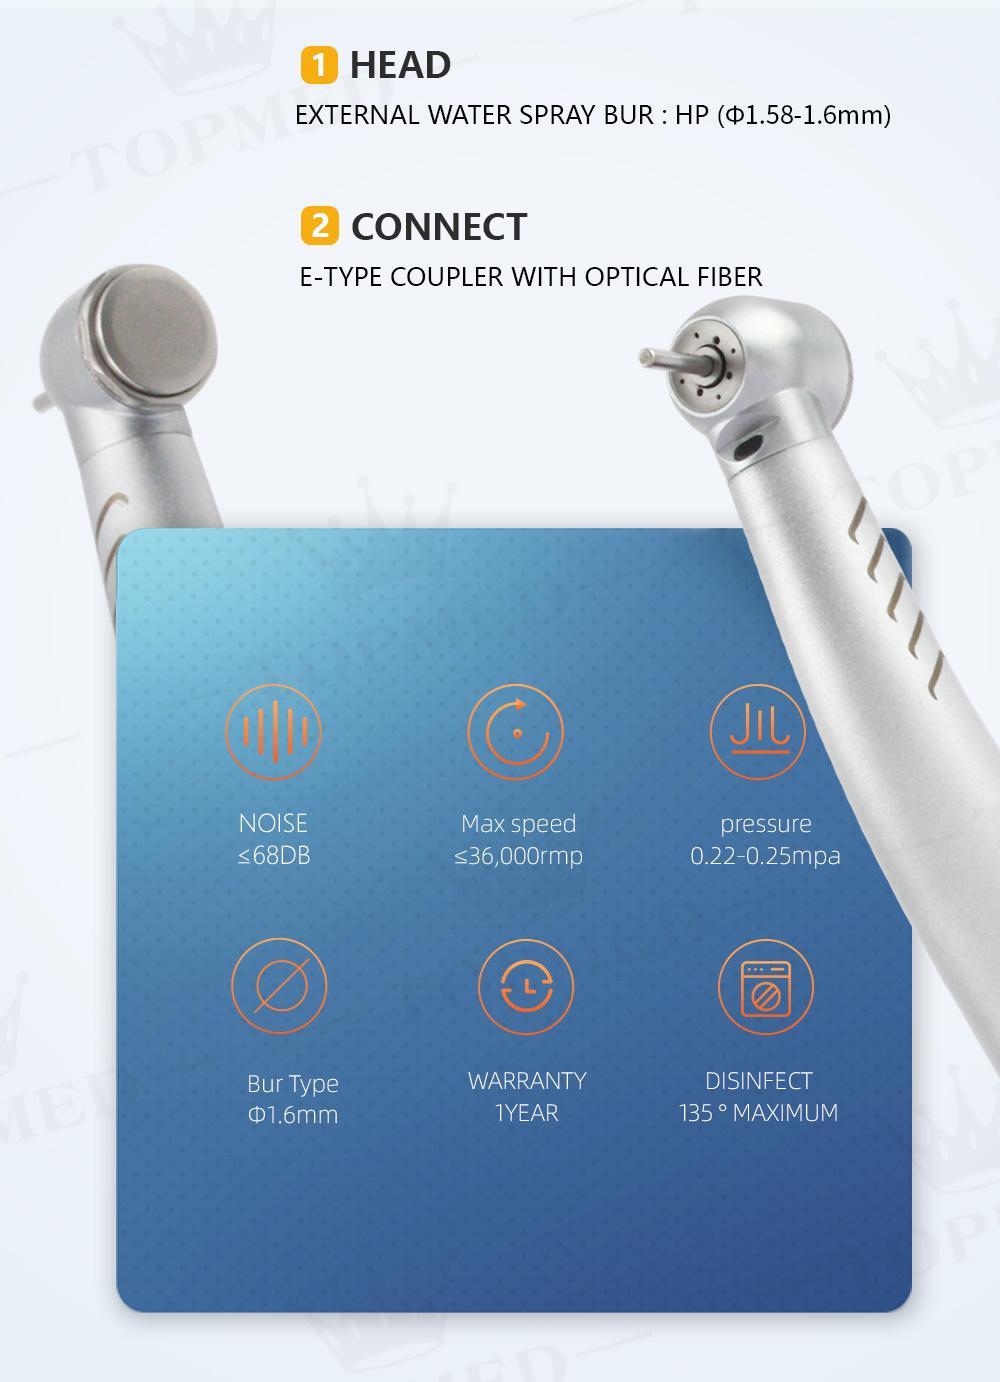 Quick Coupling Fiber Optic High Speed Turbine Dental LED Handpiece